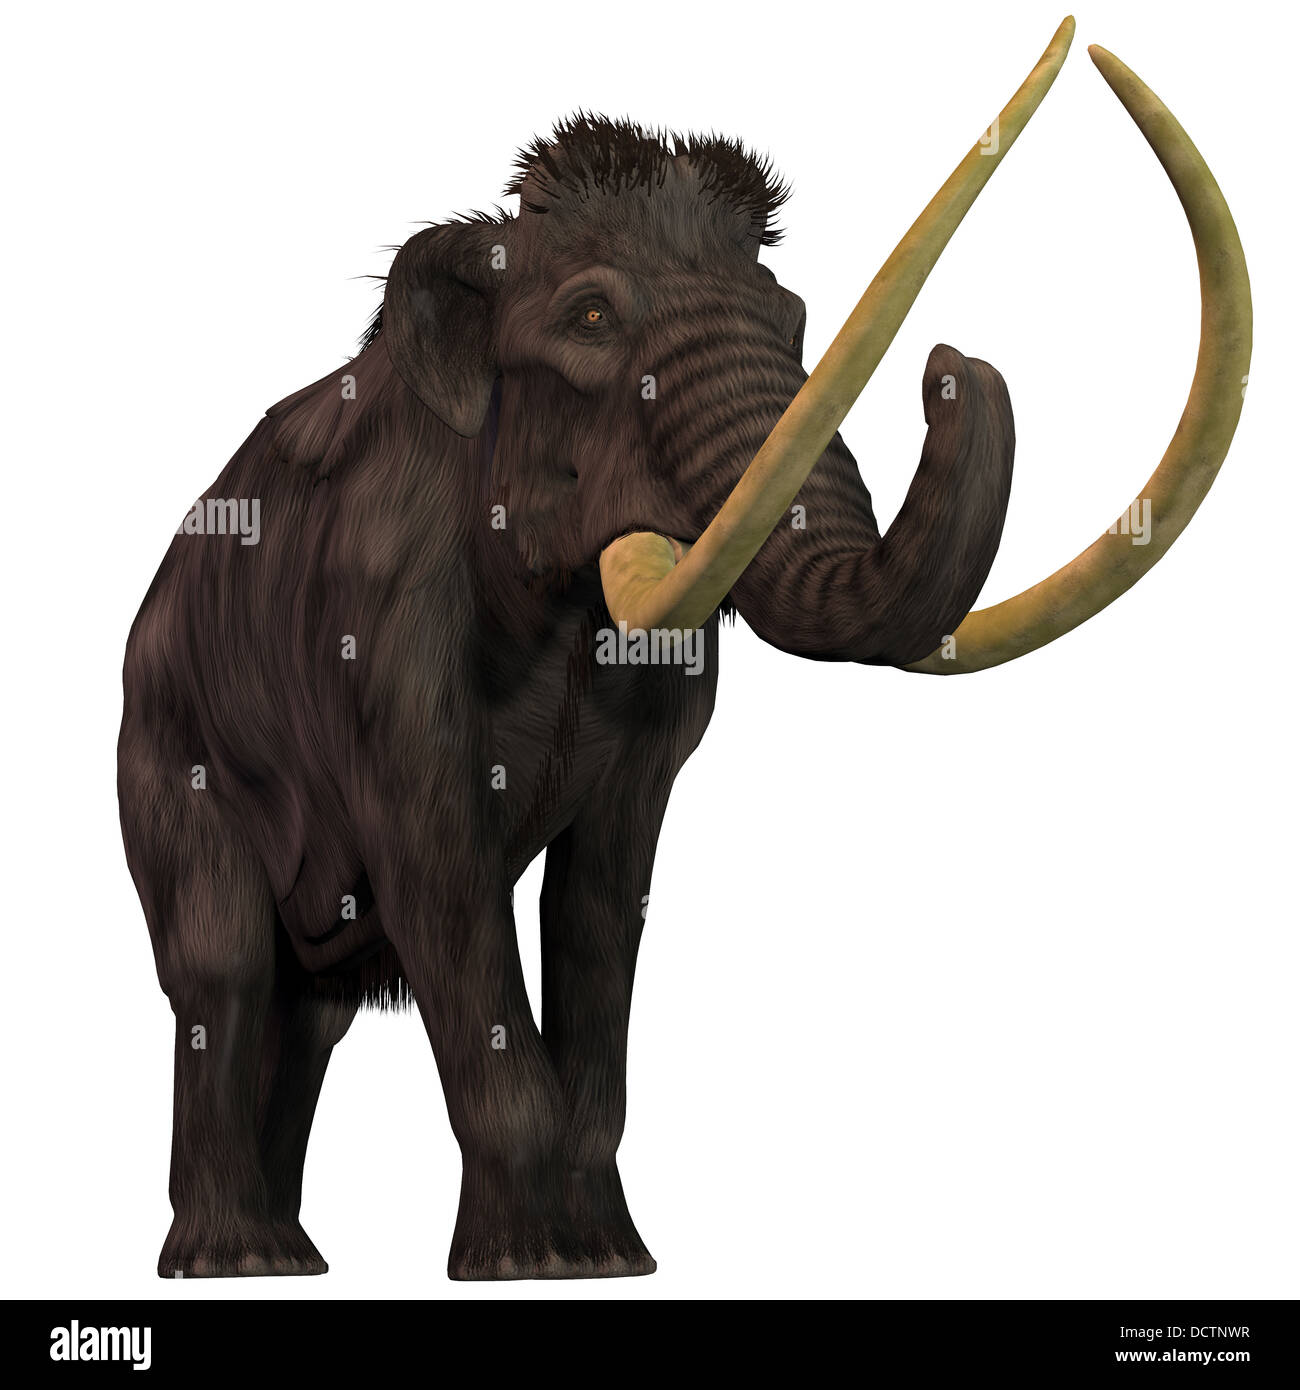 Mammut lanosi sono estinti mammiferi erbivori che ha vissuto dal Pleistocene all'Olocene periodi. Foto Stock